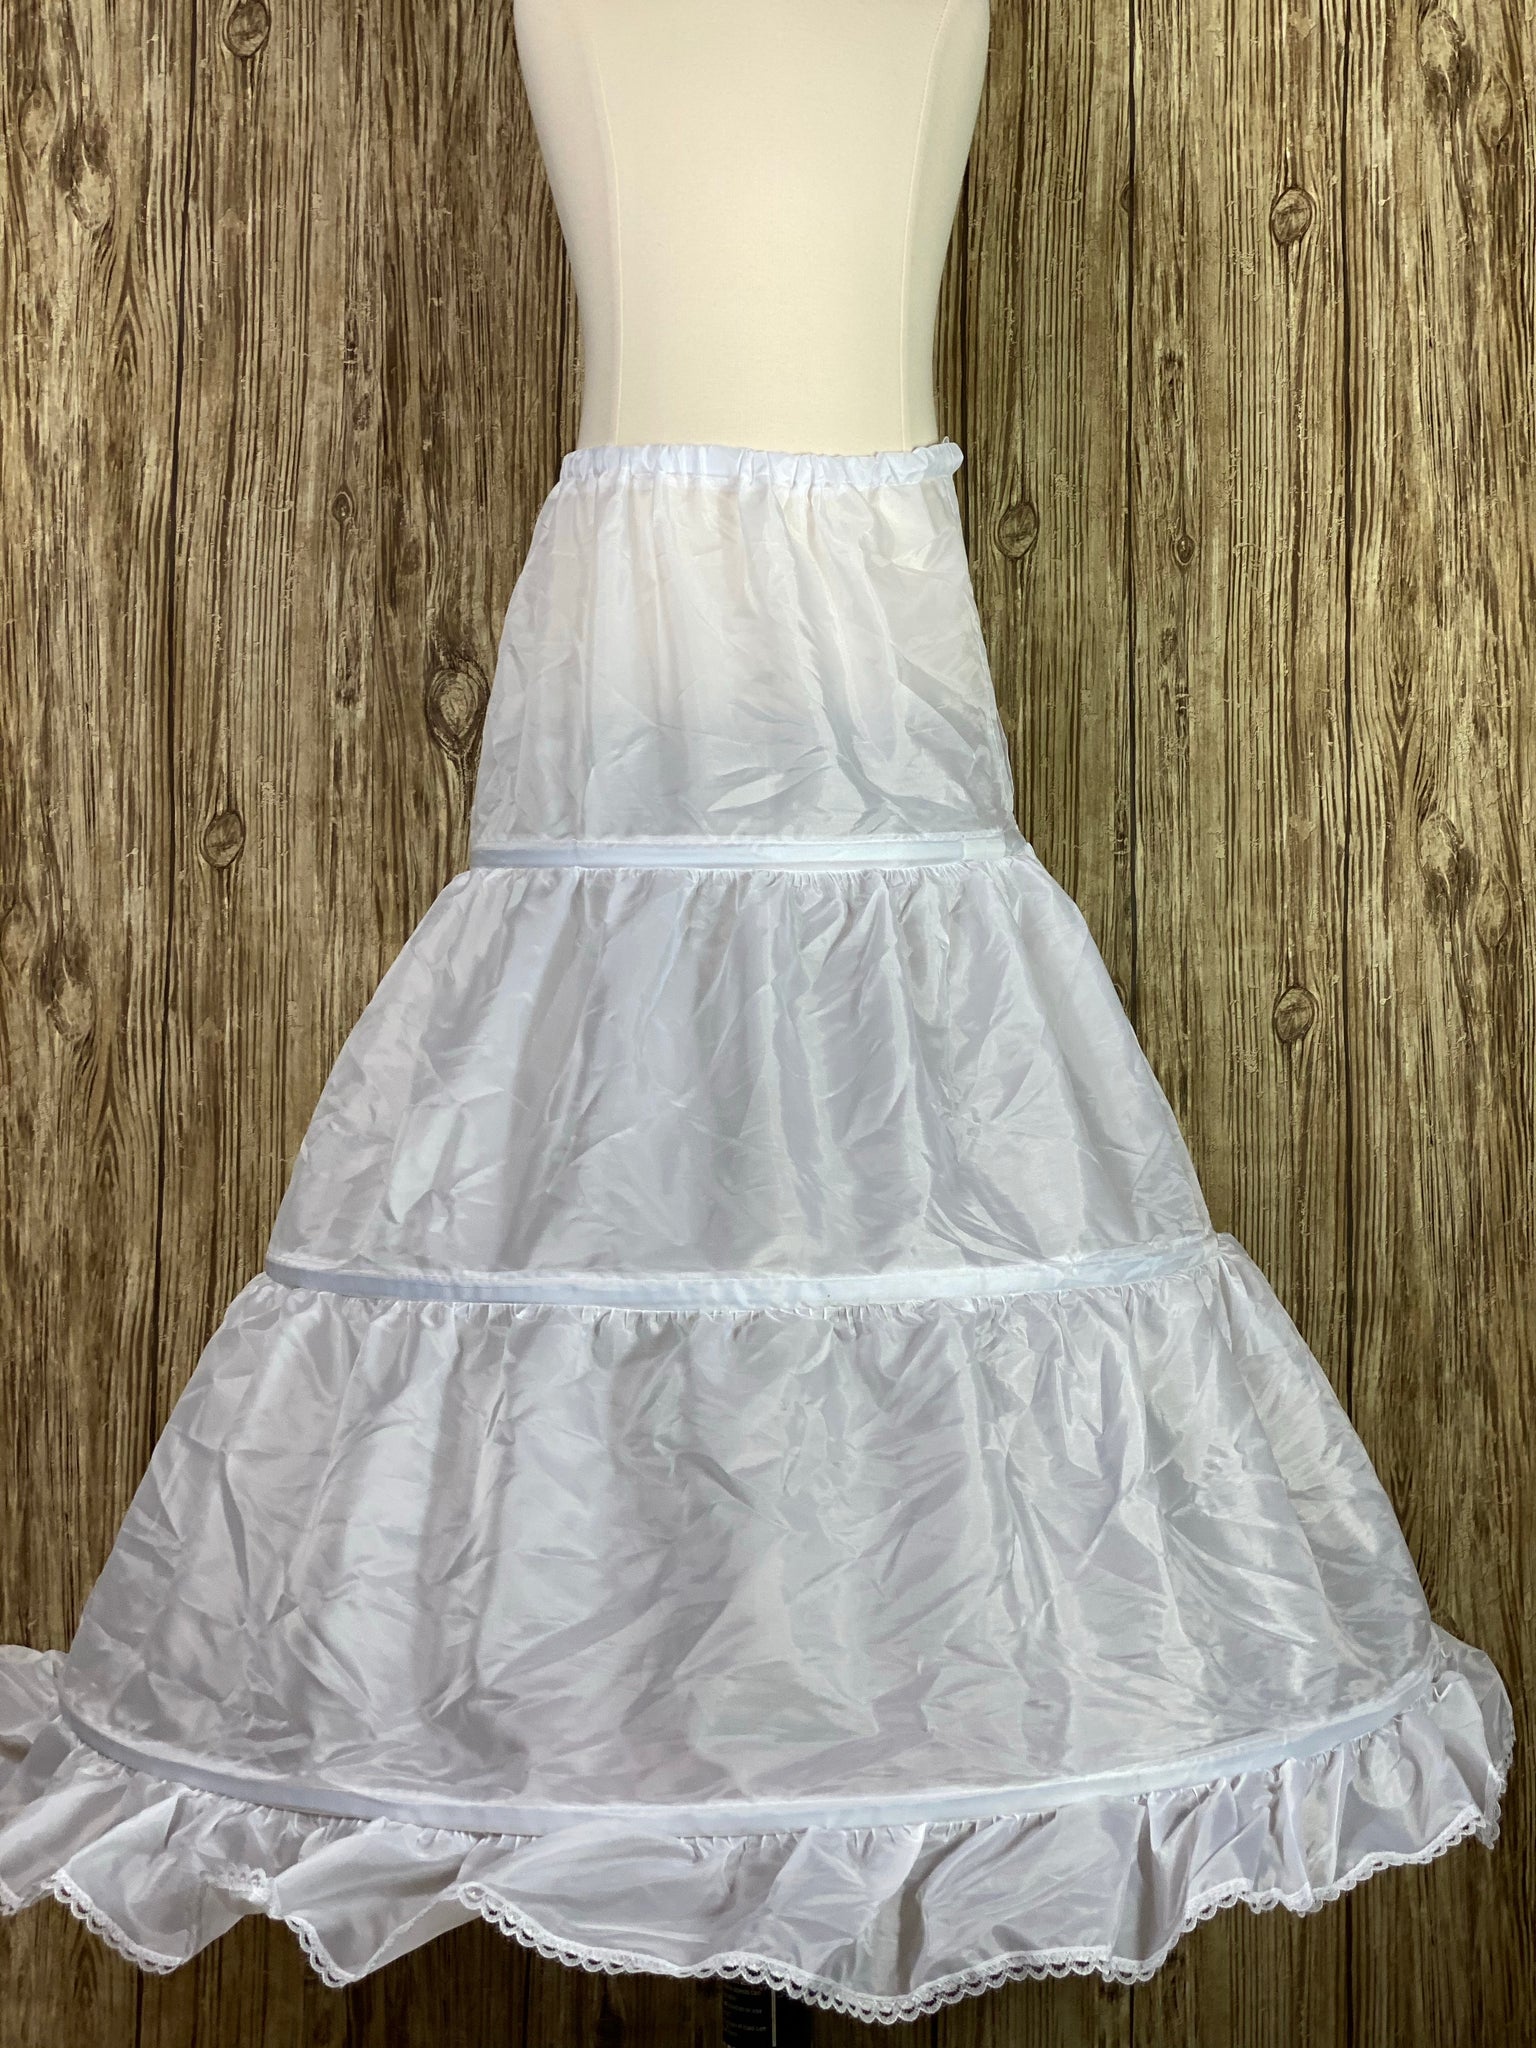 3 hoop crinoline cloth petticoat Lace trim 3 sizes Small- 26.5in diameter, 19in tall (Age 3-6) Medium- 31 diameter, 23in tall (Age 8-12) Large- 36 diameter, 30in tall (Age 14-16) Elastic wait band